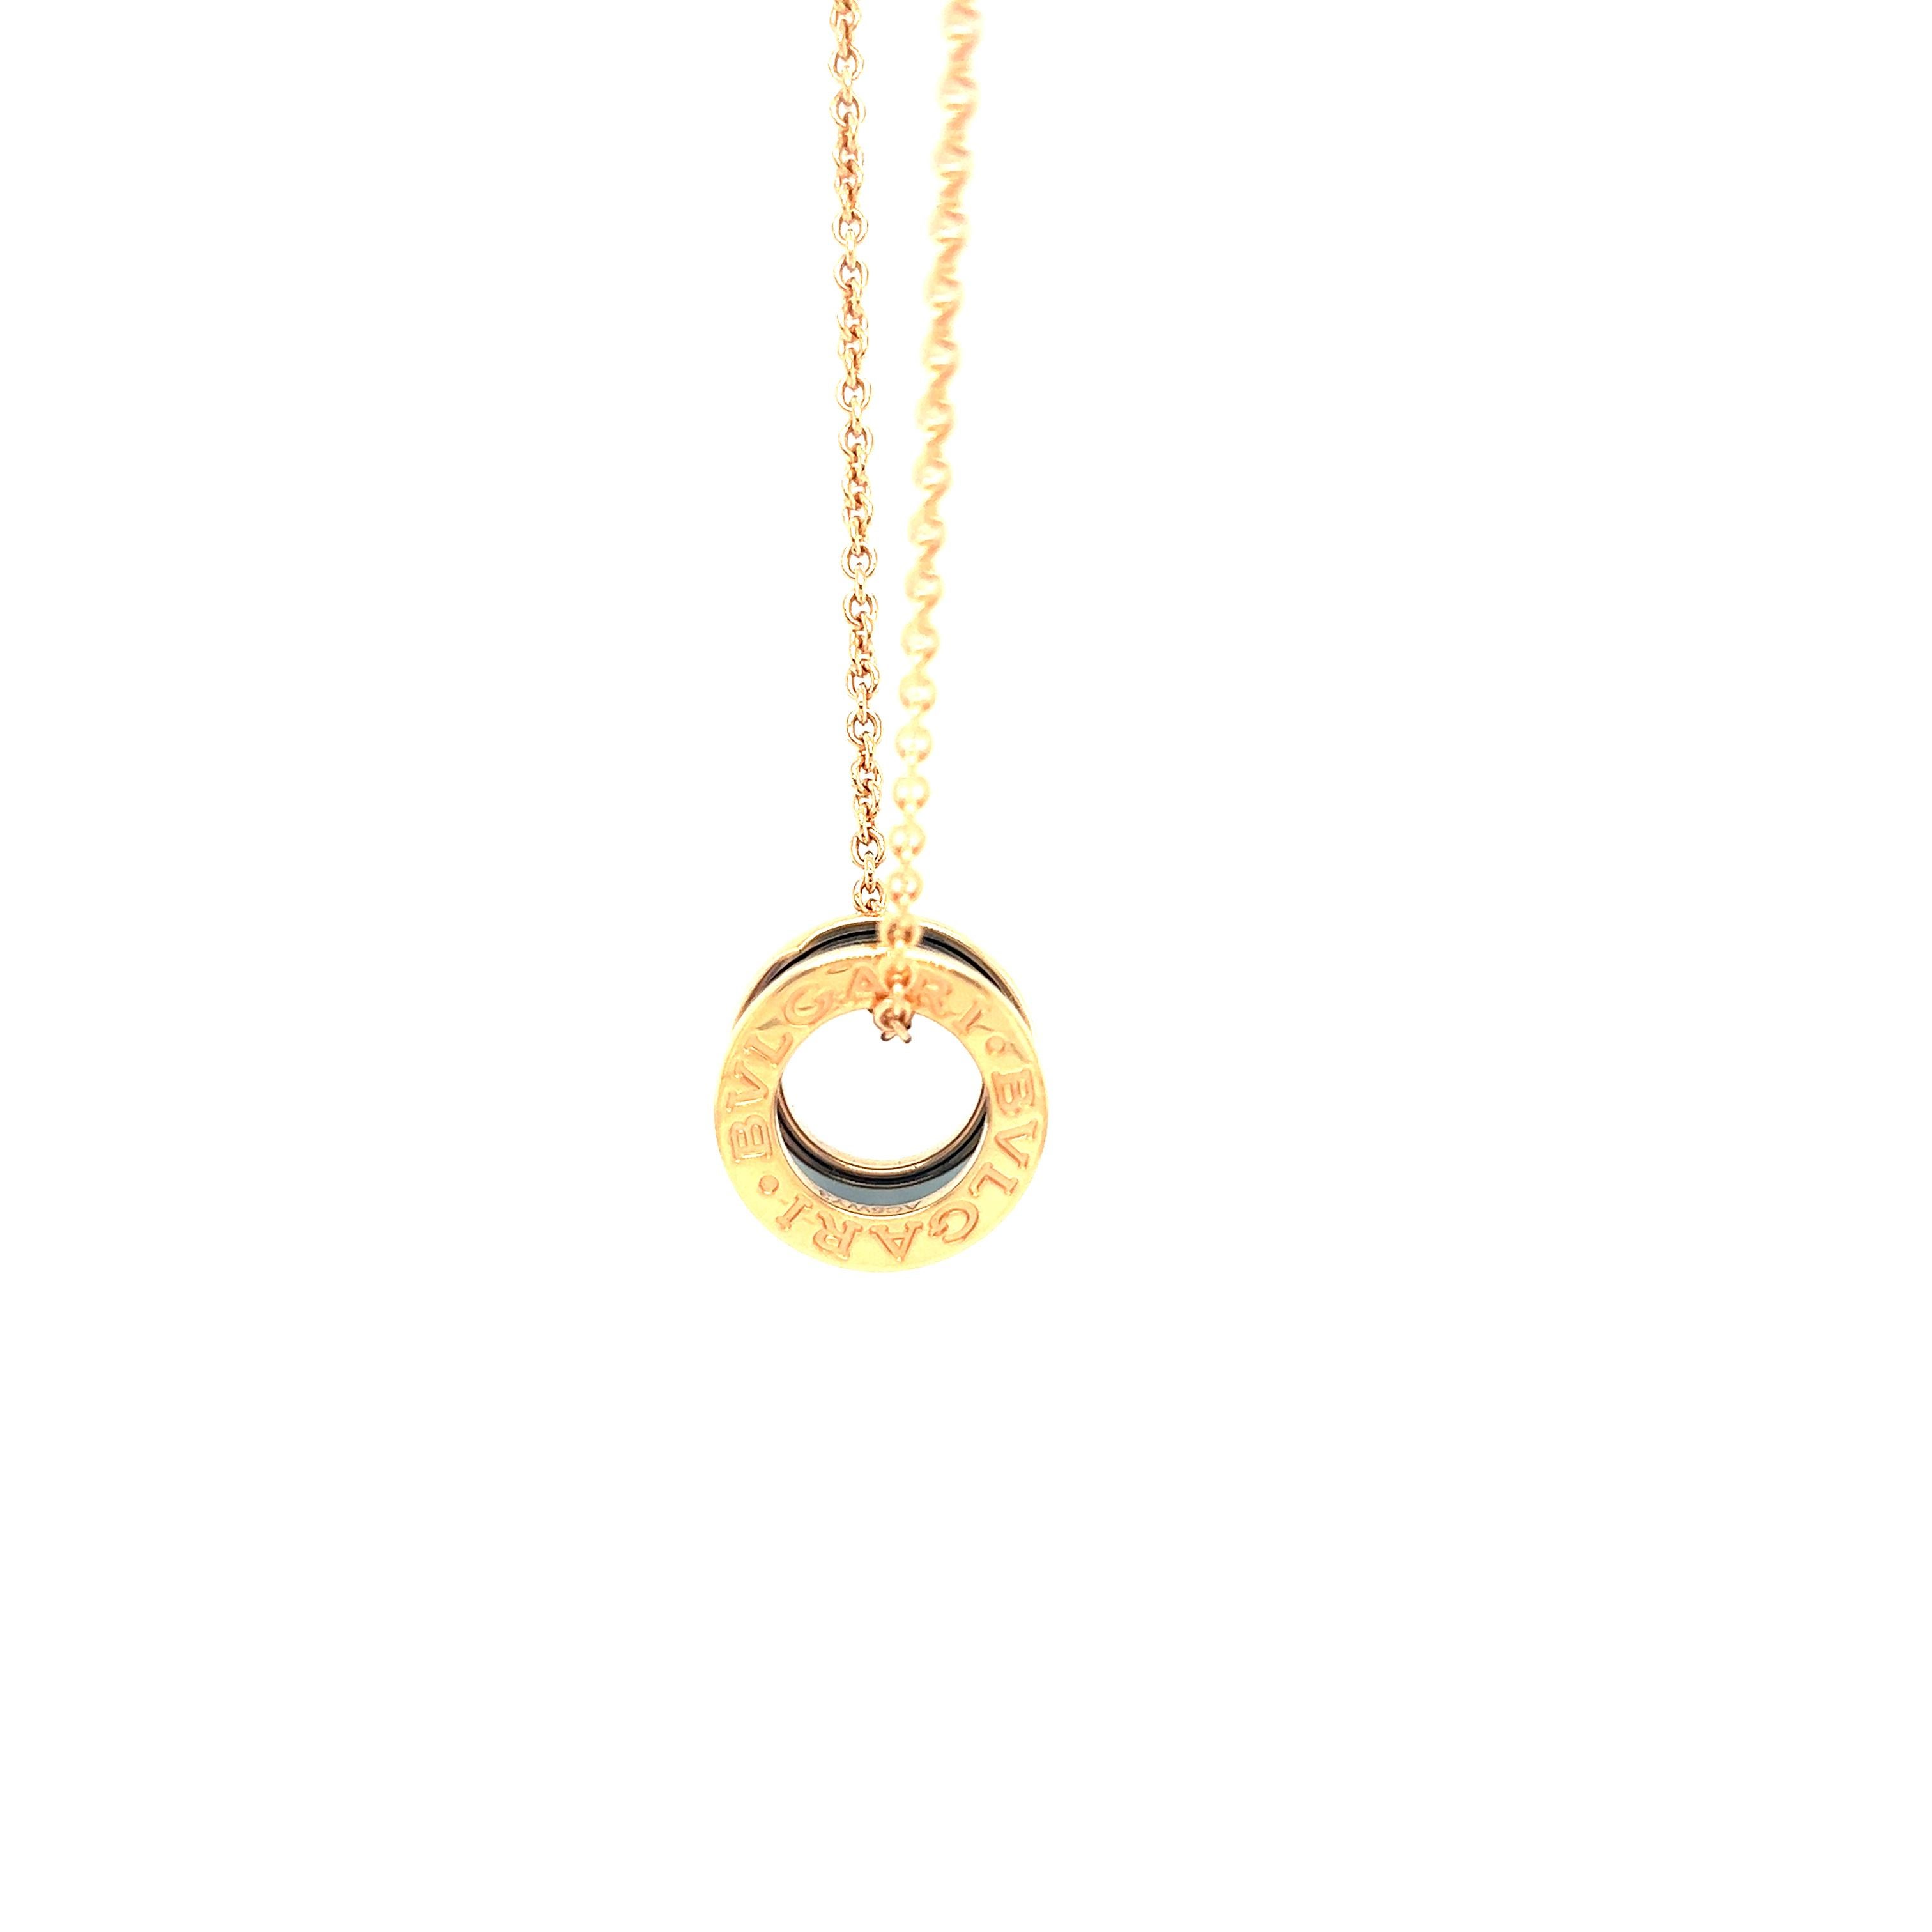 Bvlgari B-Zero rose gold and ceramic pendant model number 358050 In Excellent Condition For Sale In Addlestone, GB